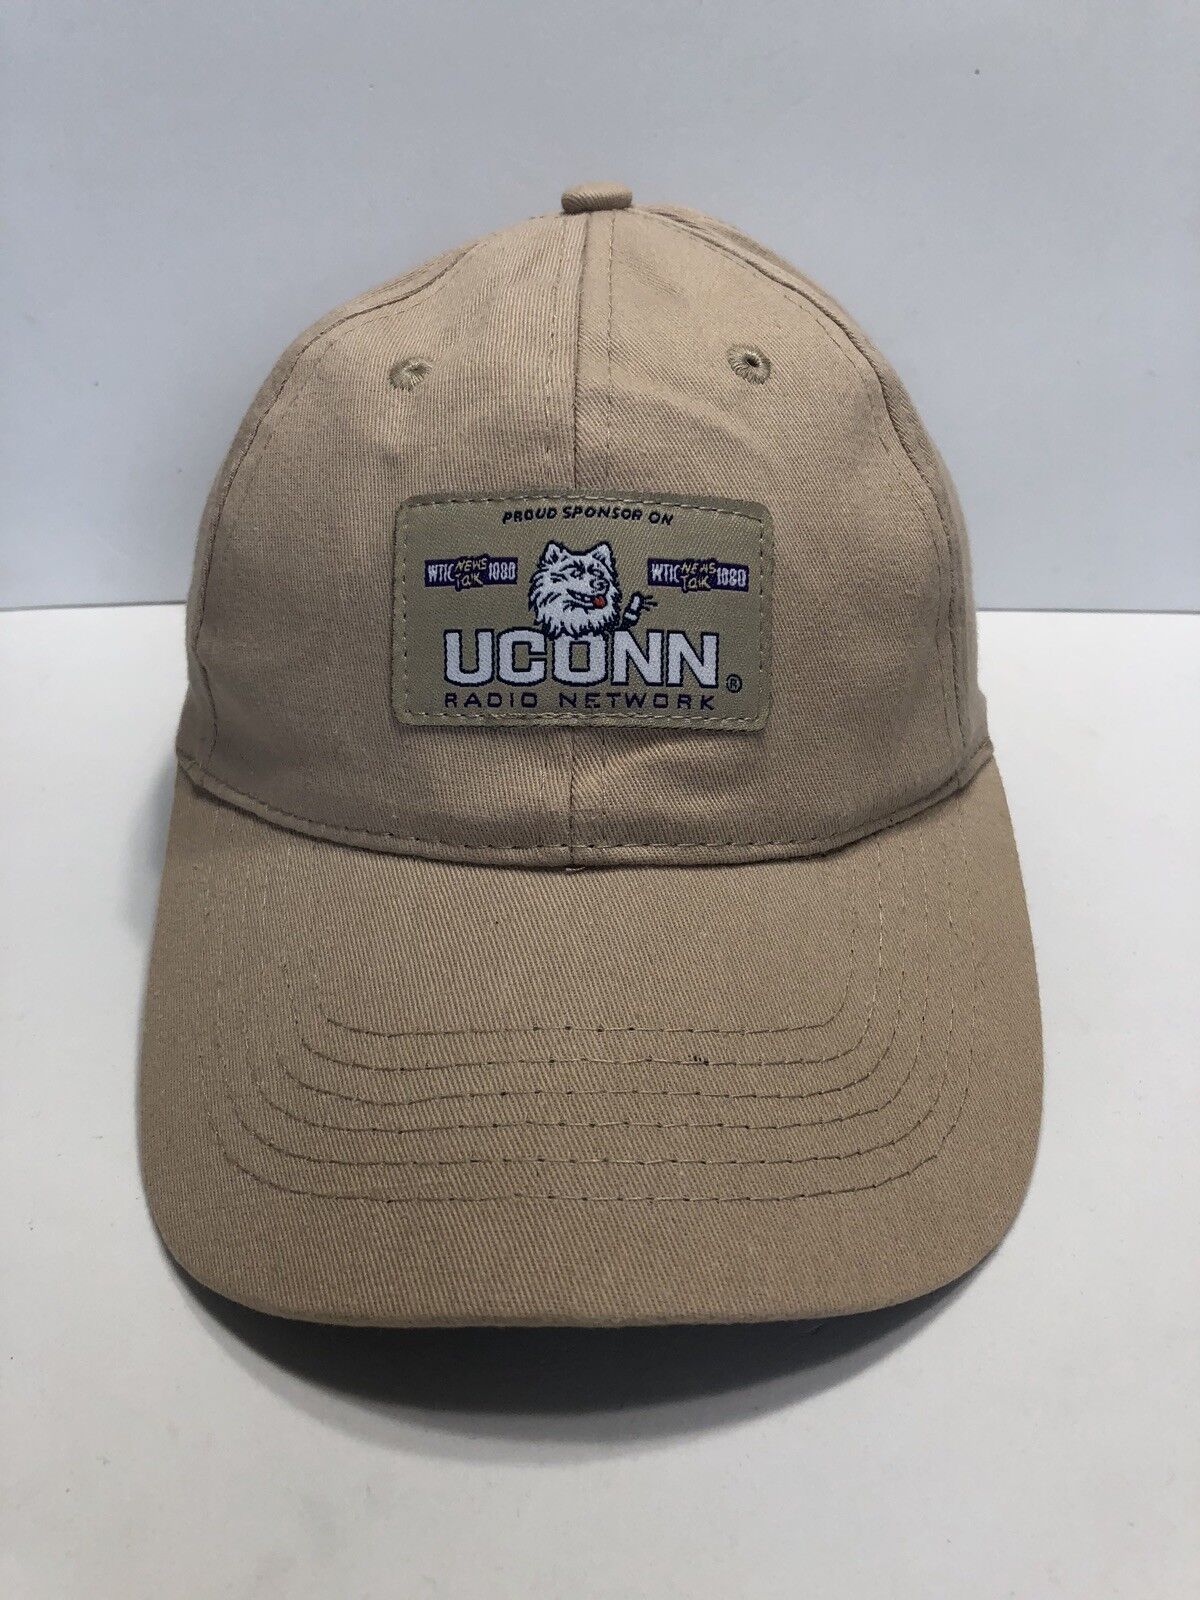 NCAA UCONN Radio Network Cap Hat Adult Adjustable Bud Light Spnsor 100% Cotton